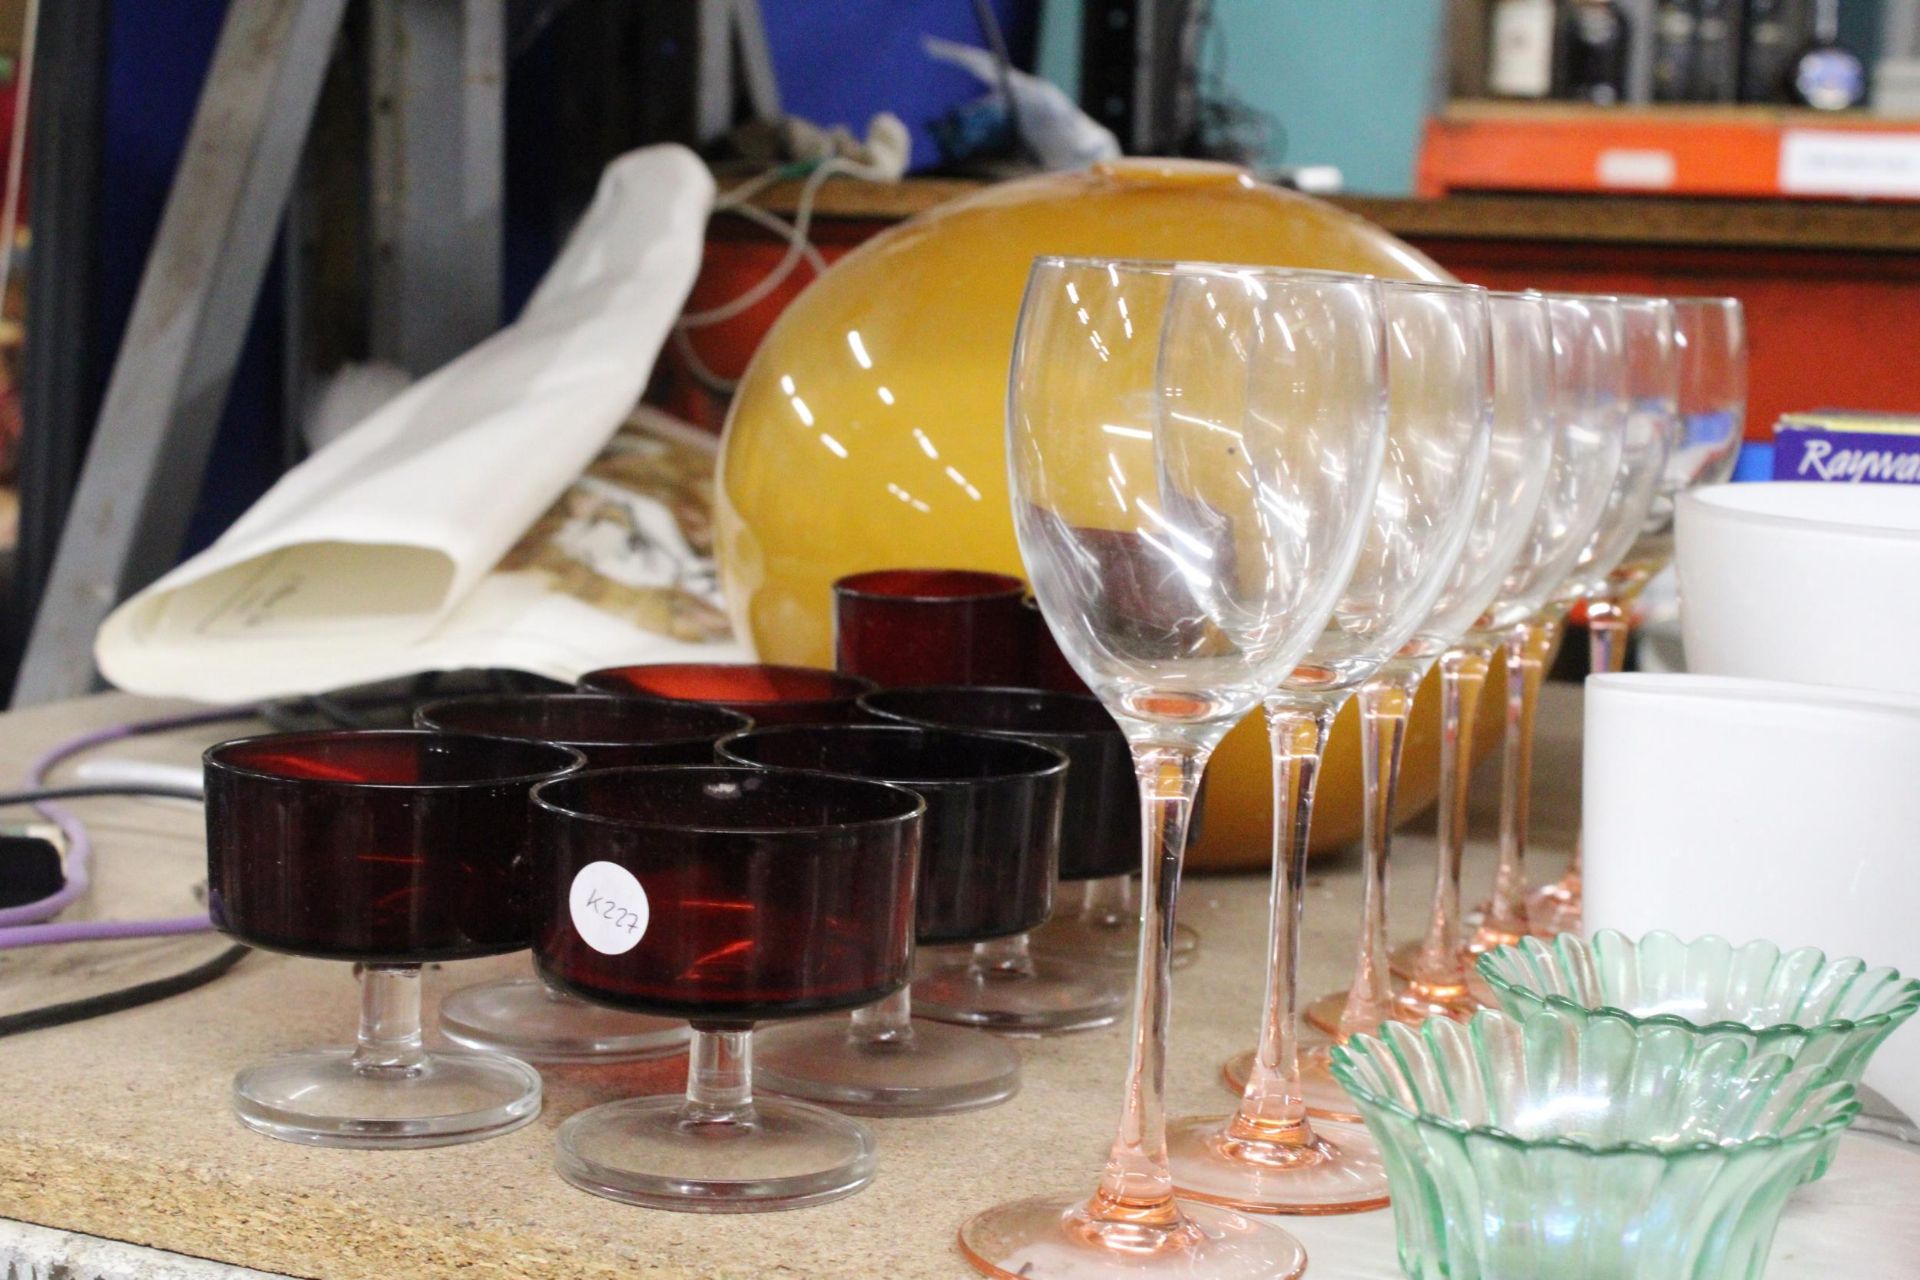 A QUANTITY OF GLASSWARE INCLUDING COLOURED WINE GLASSES, RUBY DESSERT BOWLS, A CRANBERRY JUG, - Image 2 of 4